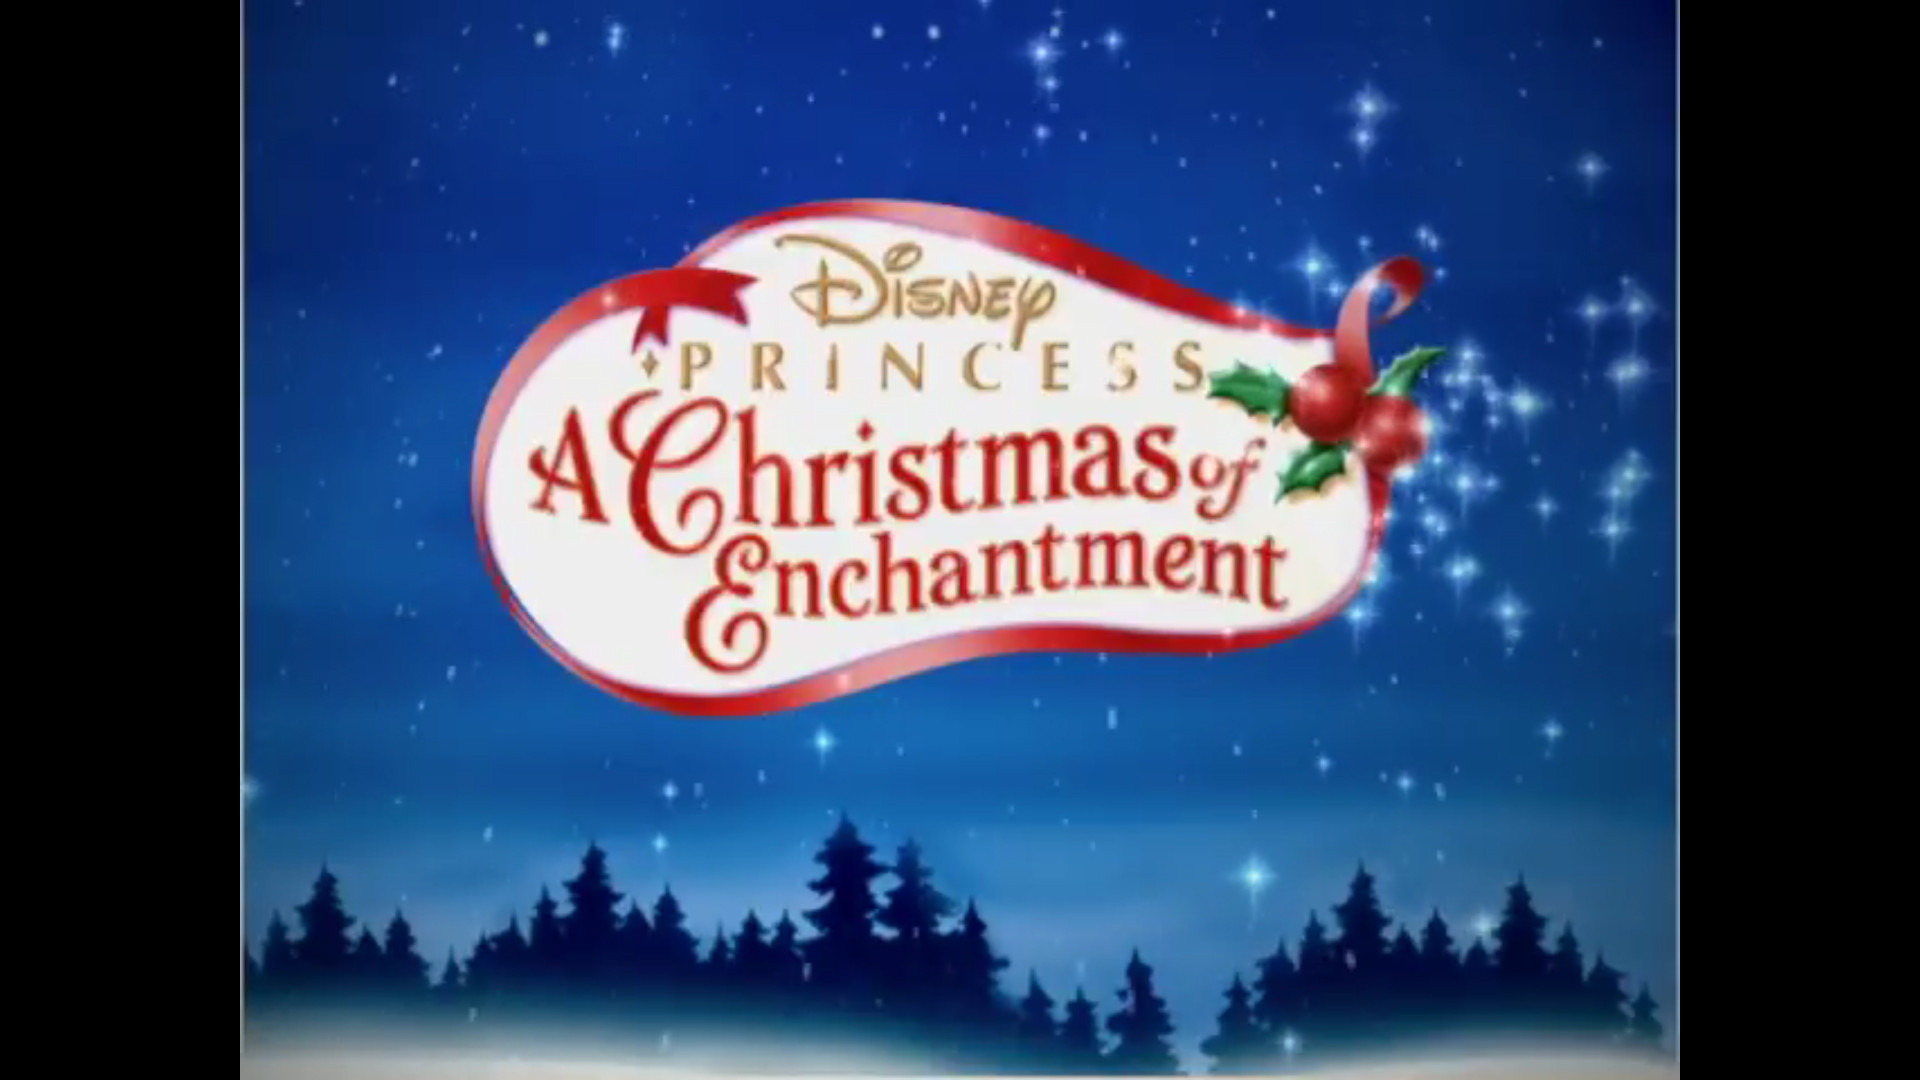 Disney Princess A Christmas of Enchantment (2005)